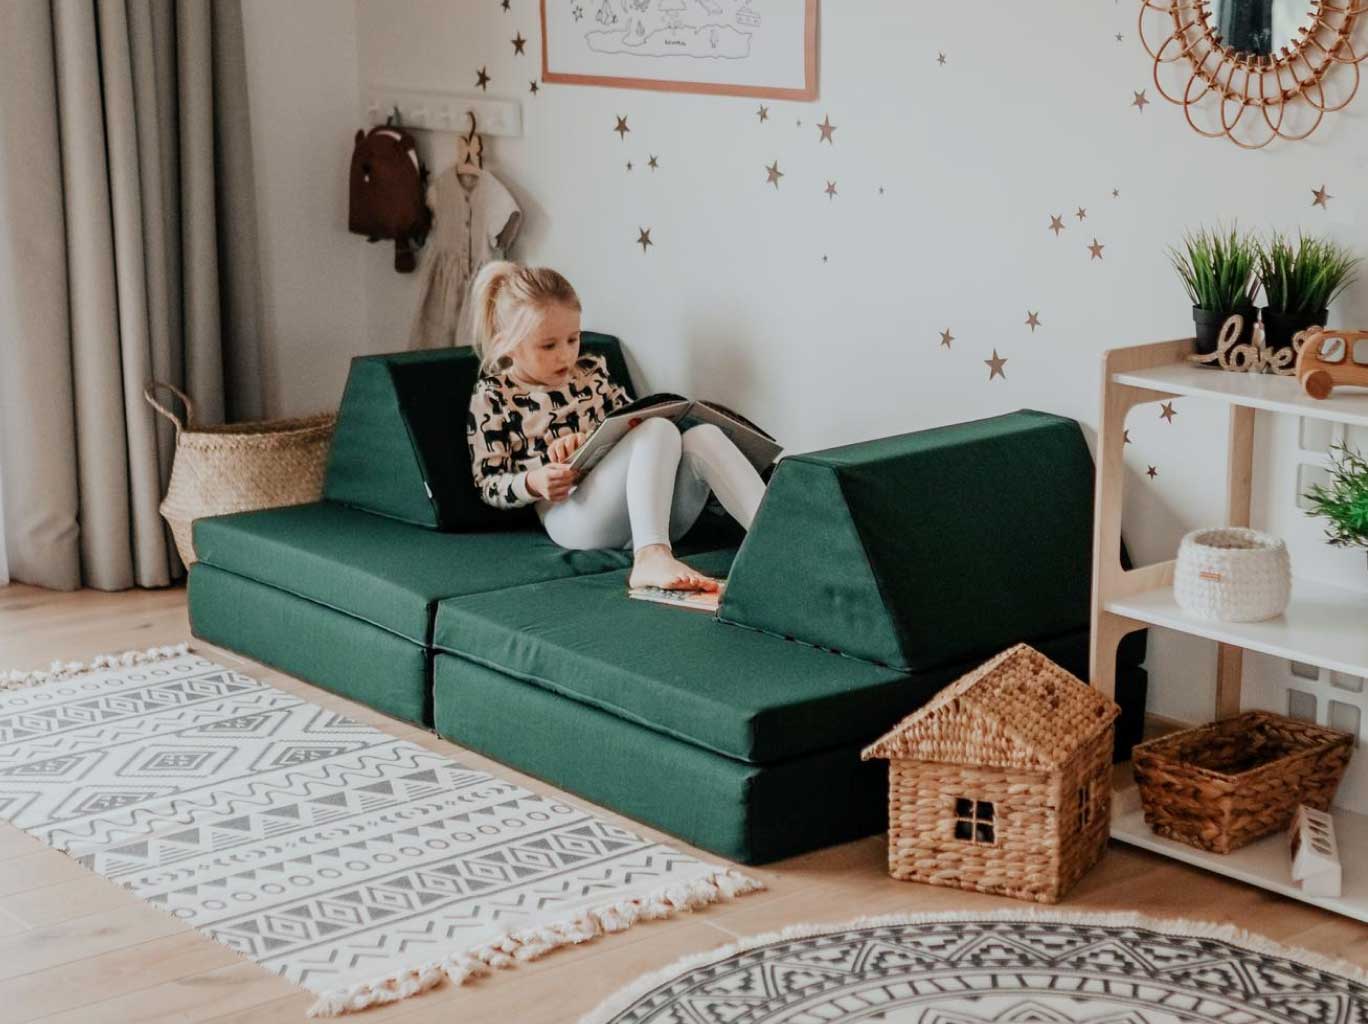 A toddler girl reading a book on her deep green Monboxy sofa set